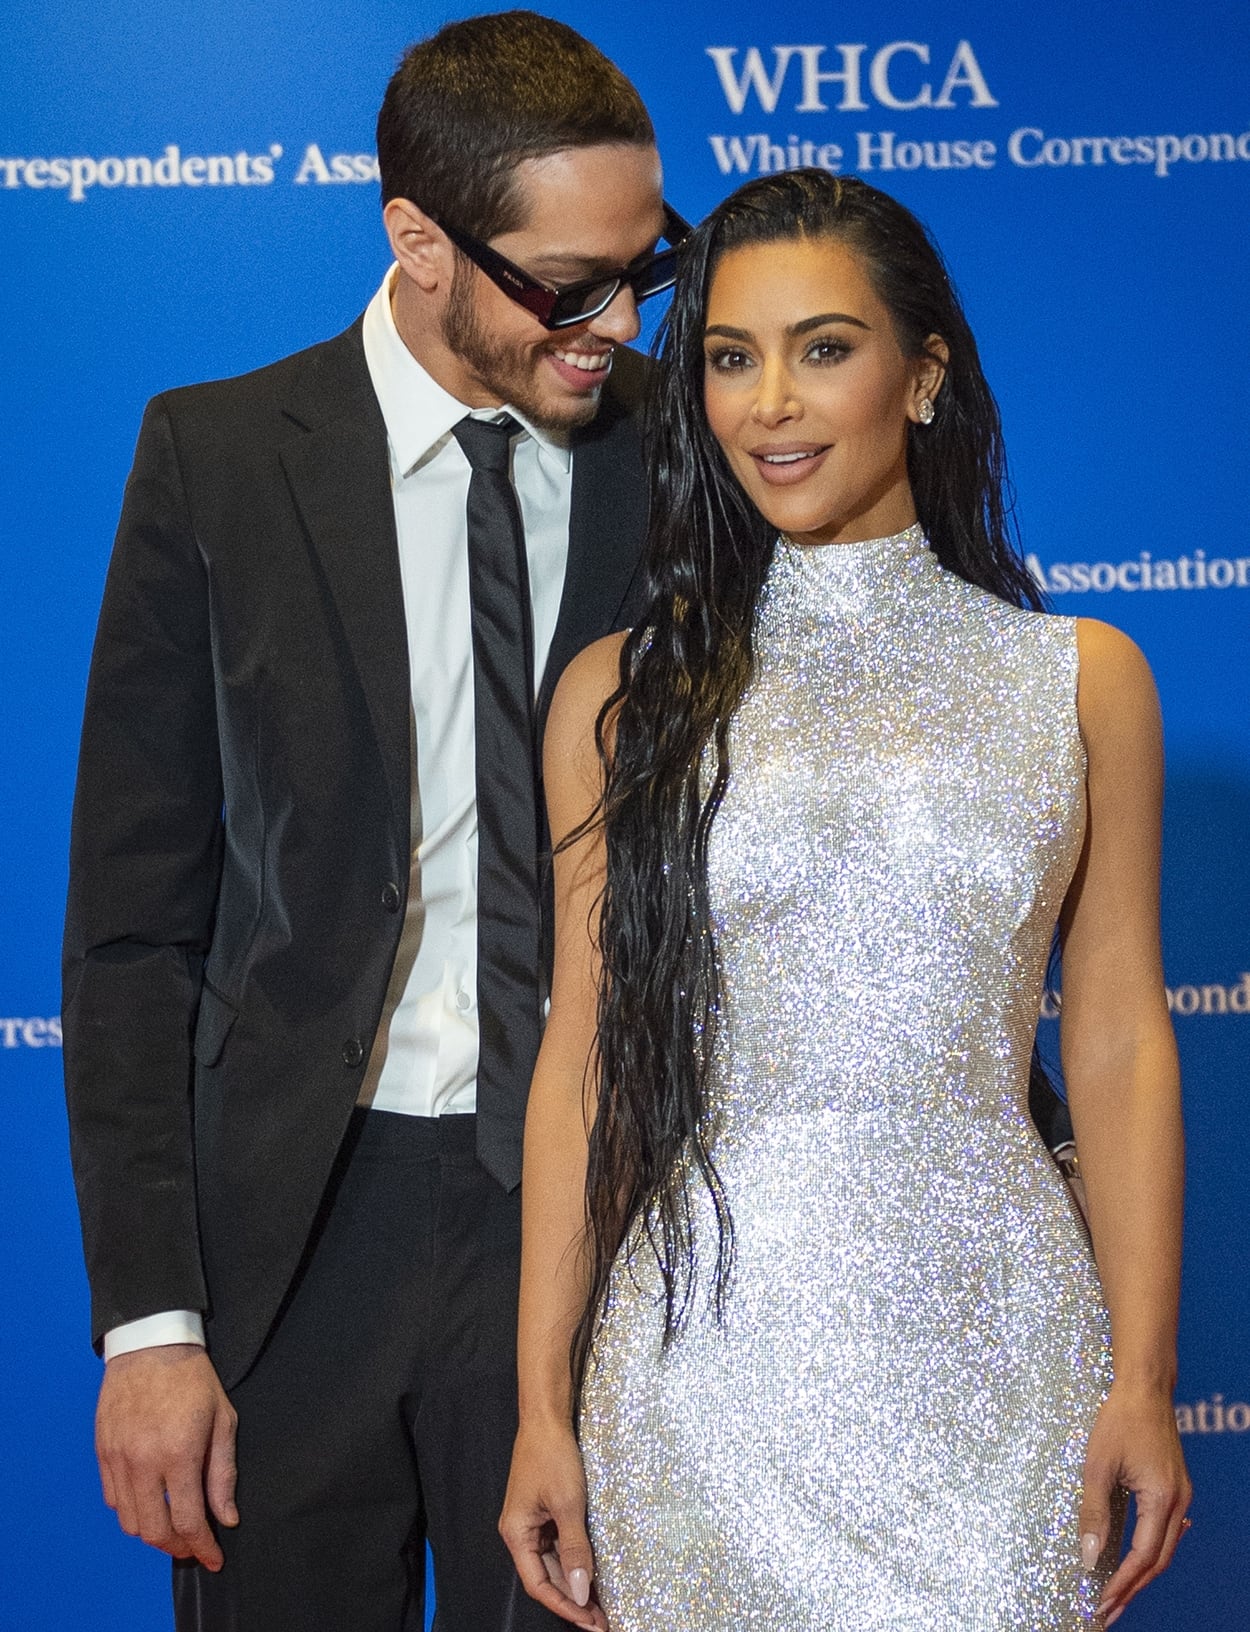 Pete Davidson and Kim Kardashian making their red carpet debut as a couple at the 2022 White House Correspondents’ Dinner